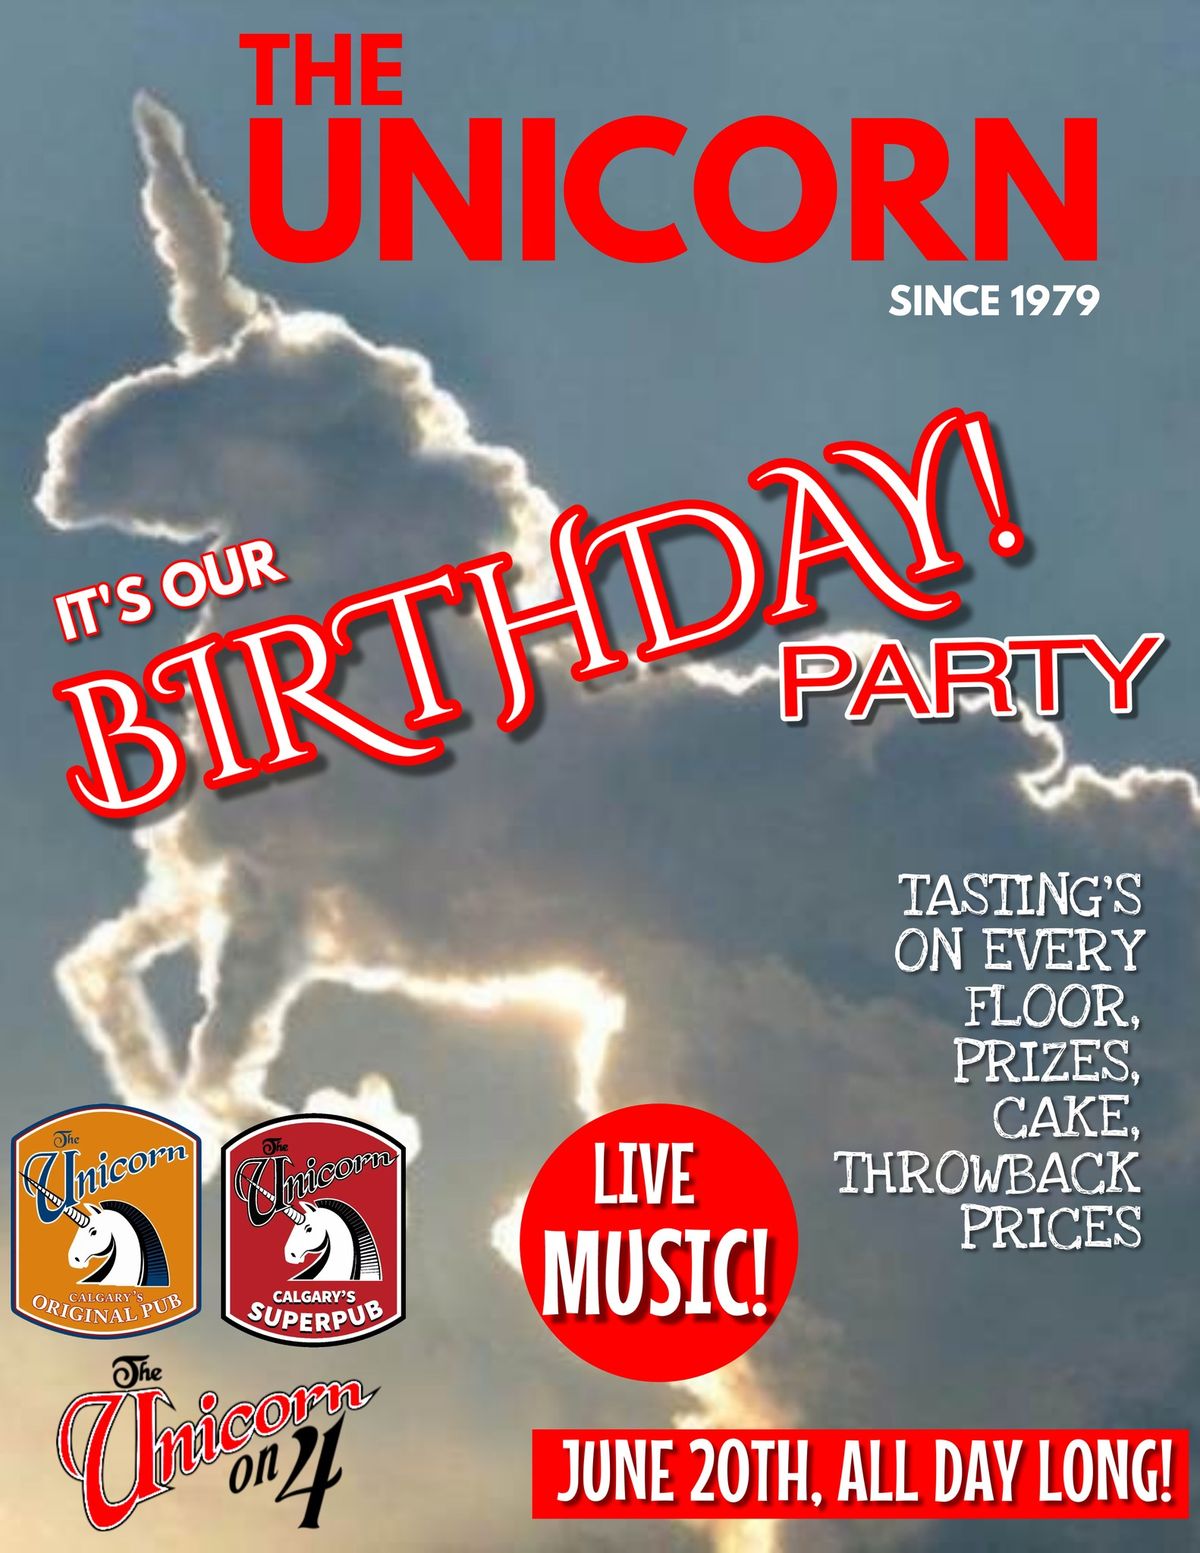 The Unicorn turns 45!!